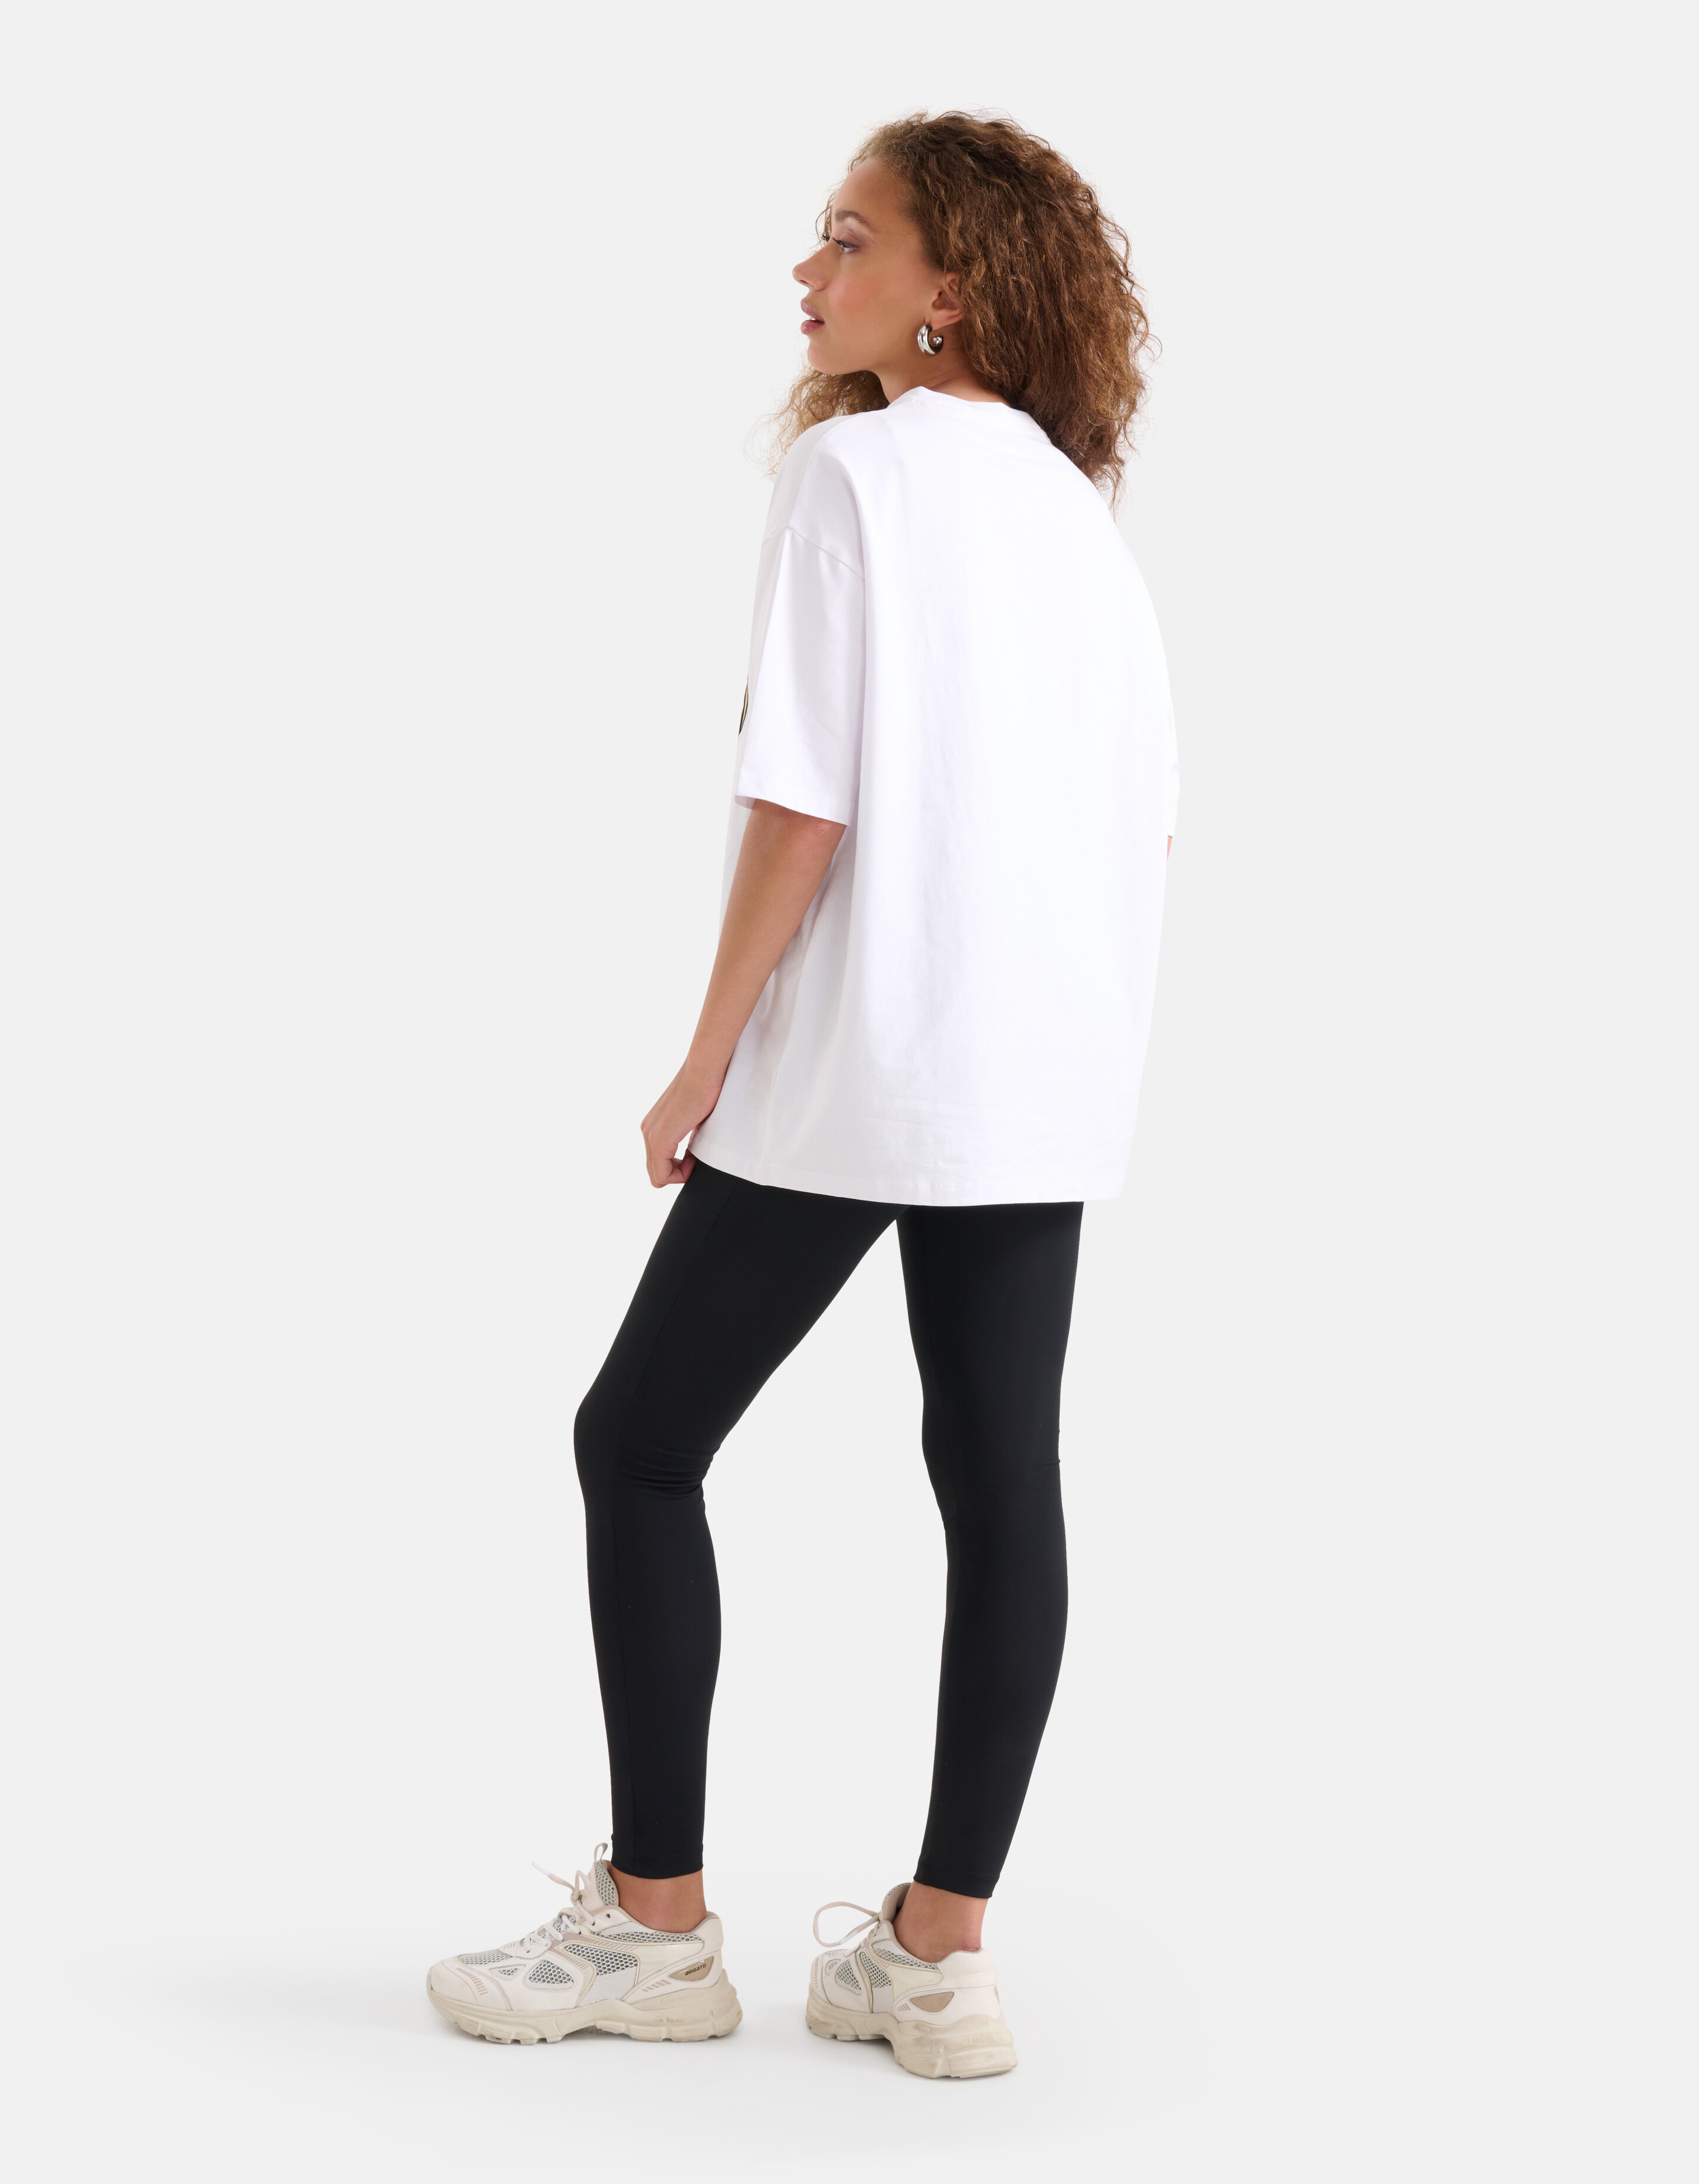 Samt Kunstwerk T-shirt Weiß SHOEBY WOMEN